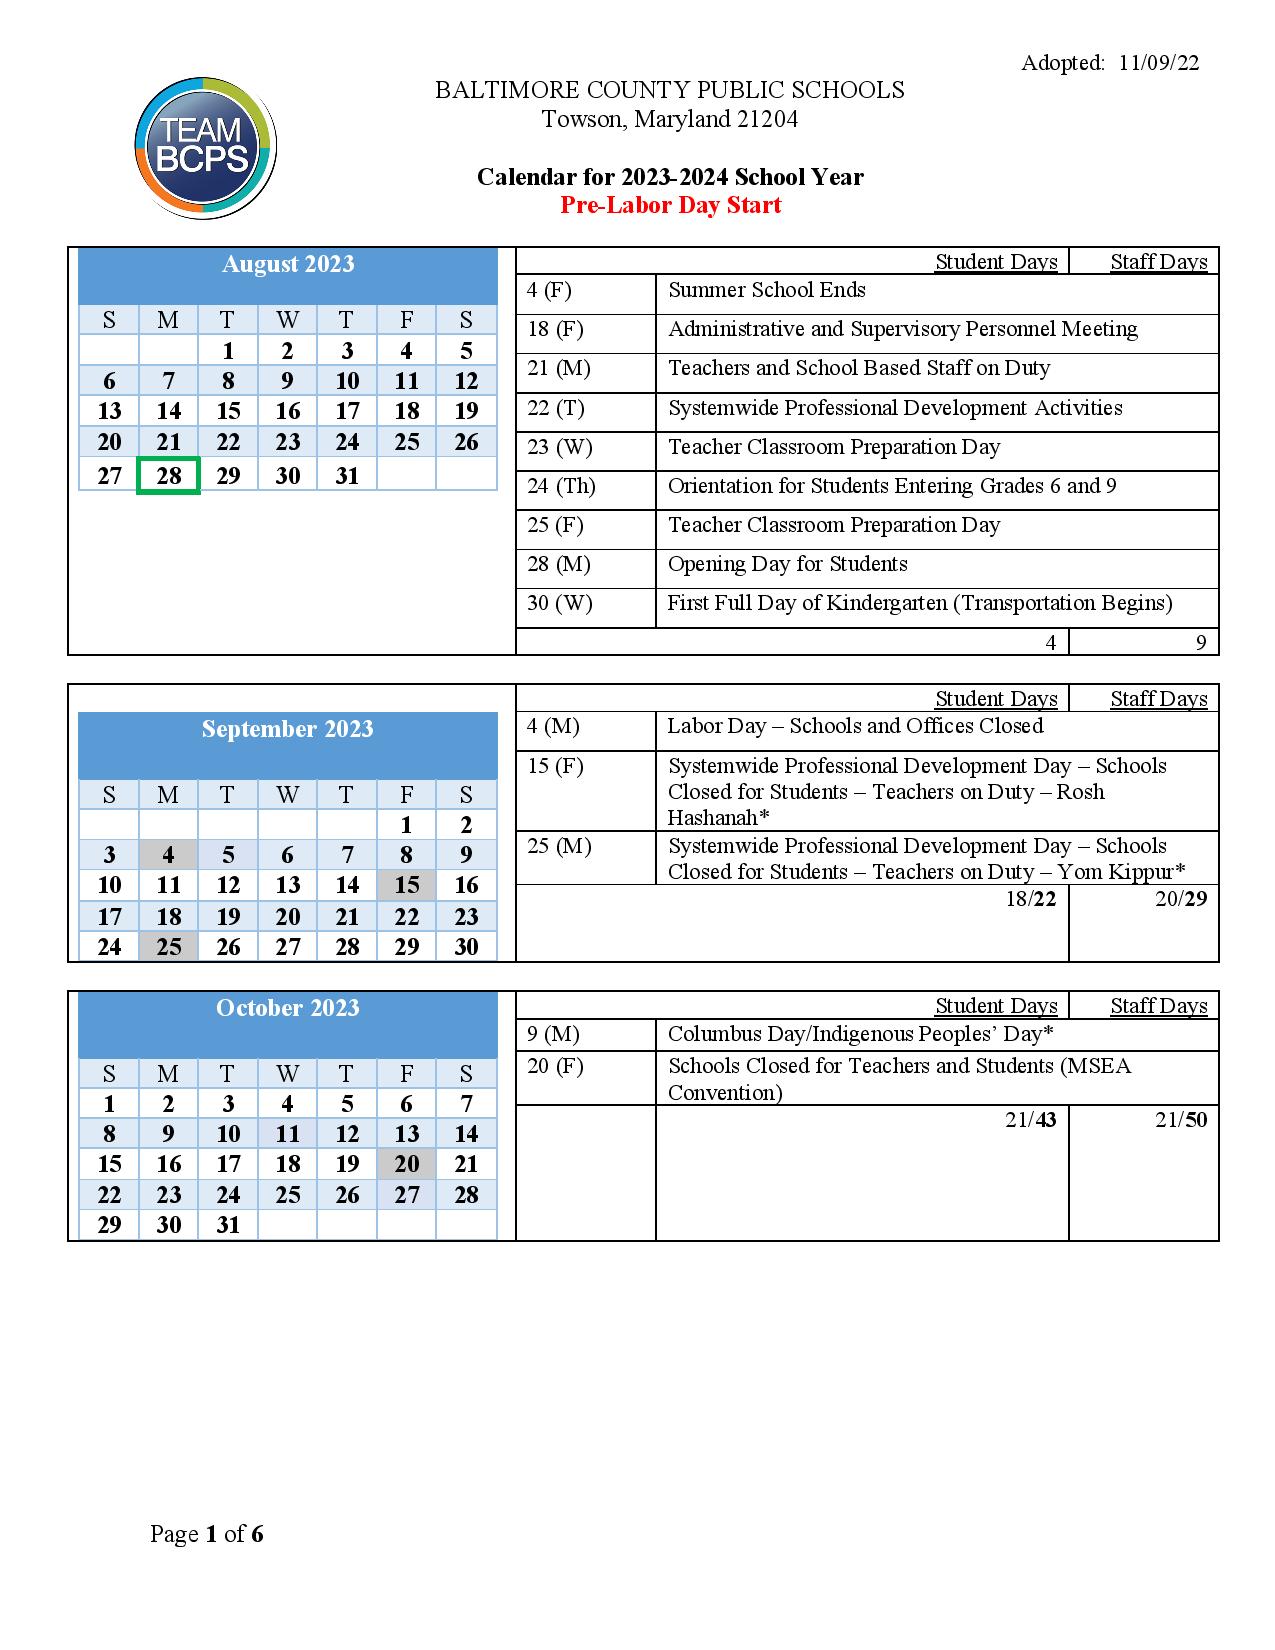 Baltimore County Public Schools Calendar 2023 2024 School Calendar Info